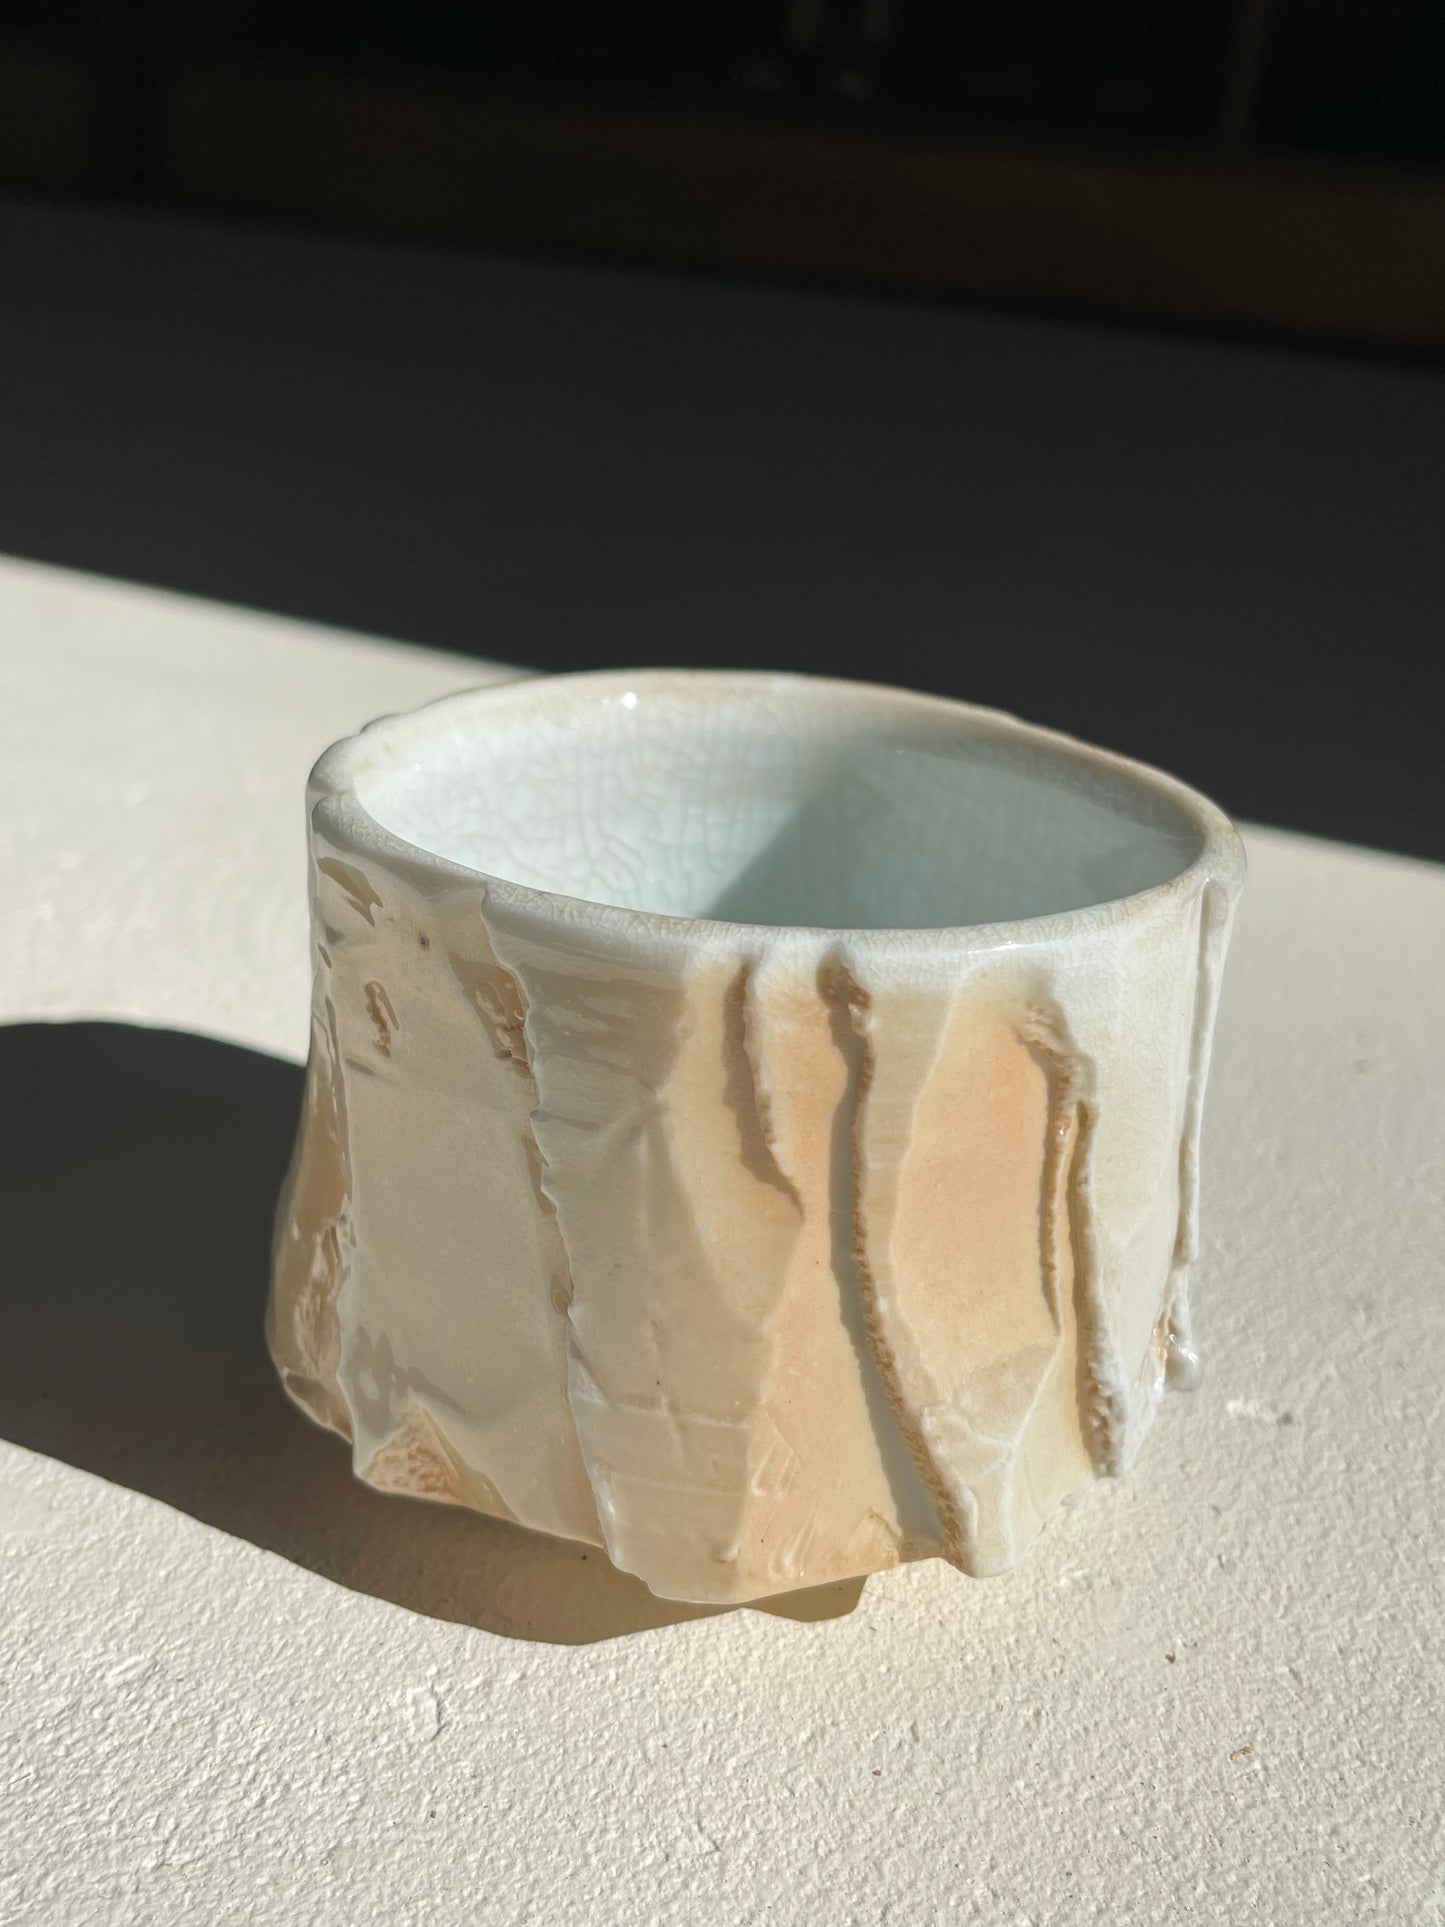 ALESSANDRO DI SARNO - Carved bowl